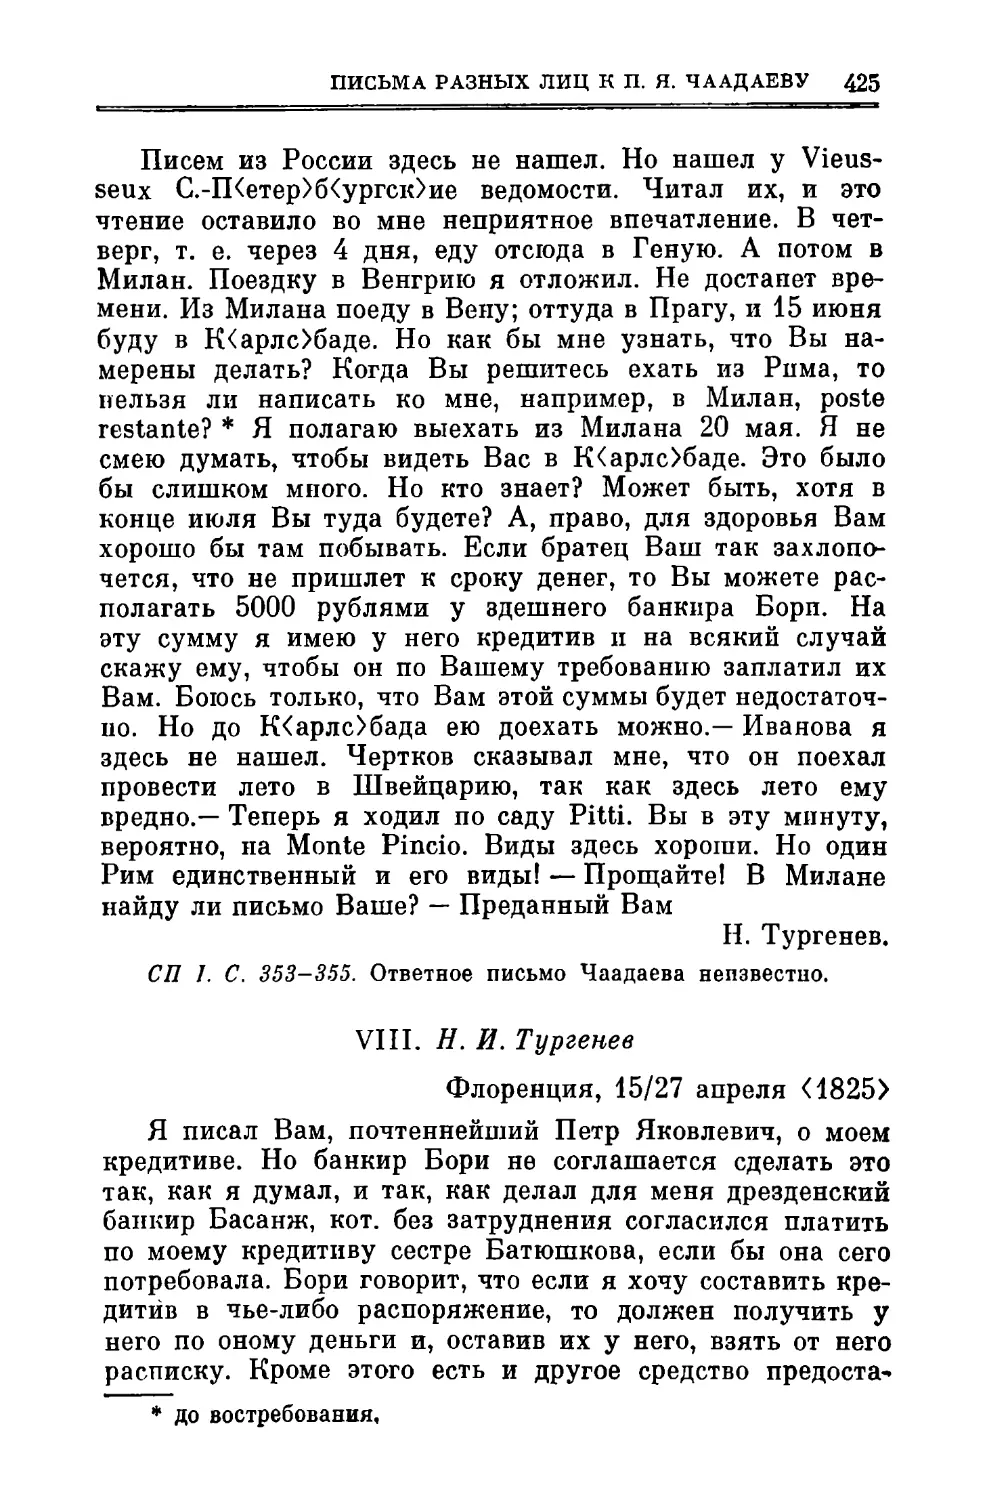 VIII. Тургенев Н.И. 15/27.ІV.1825